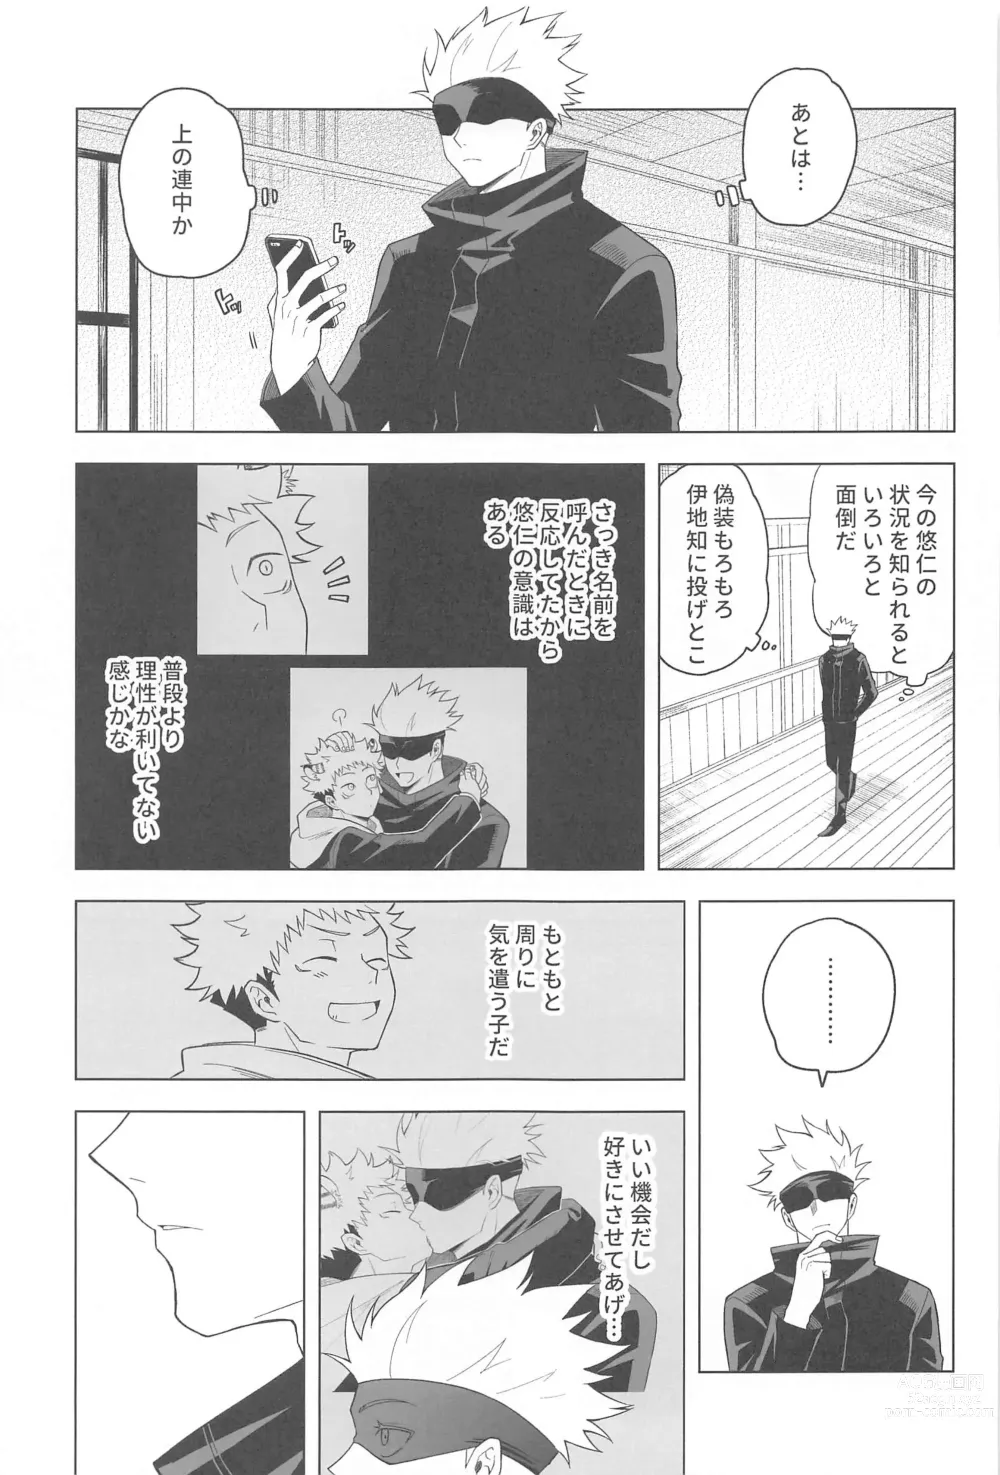 Page 11 of doujinshi KEMOMIMISHIPPO